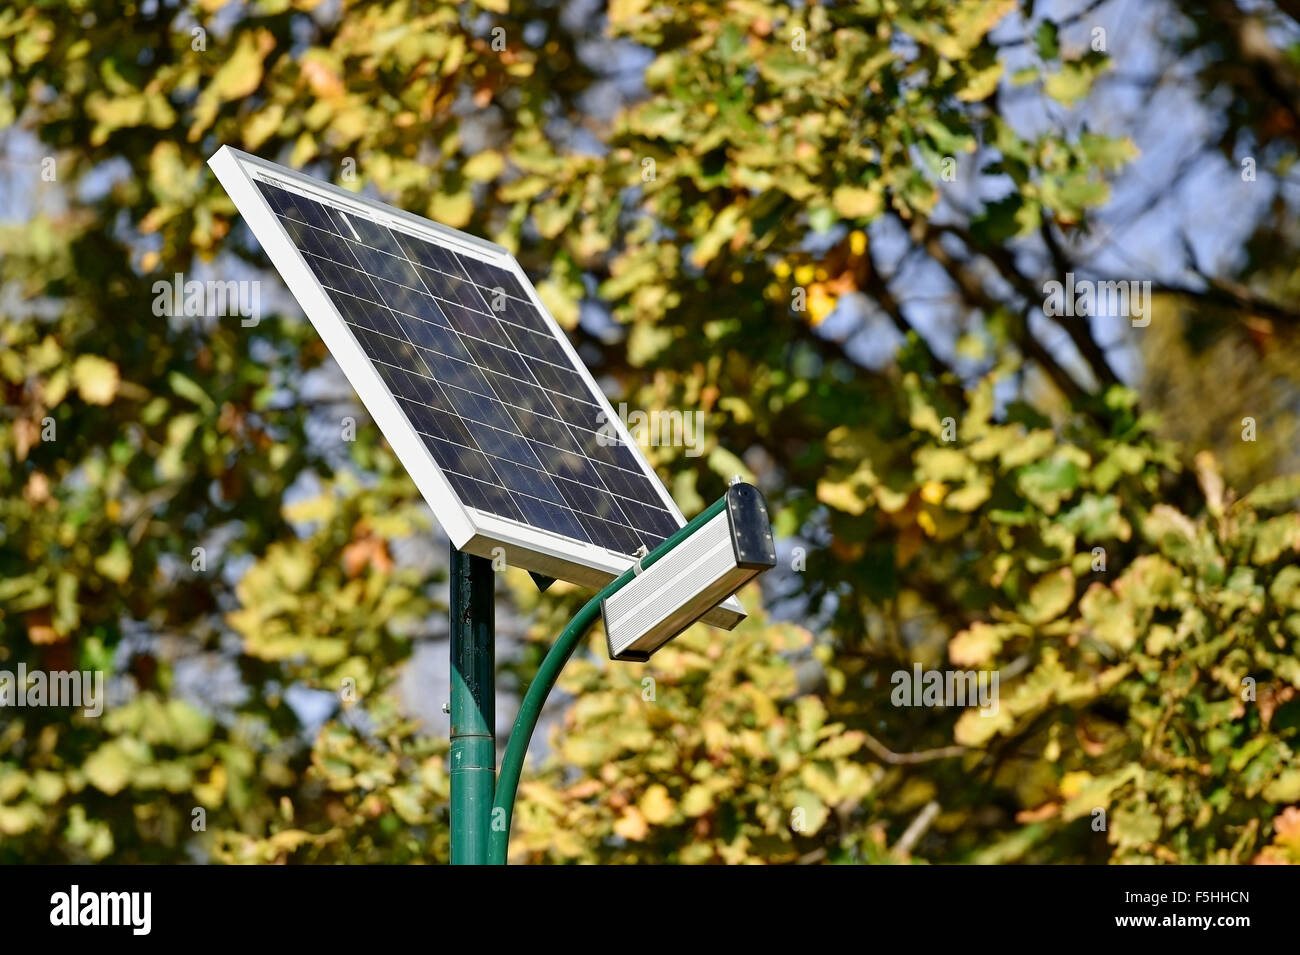 Solar street lamp in a park isolated on a clear blue sky Stock Photo